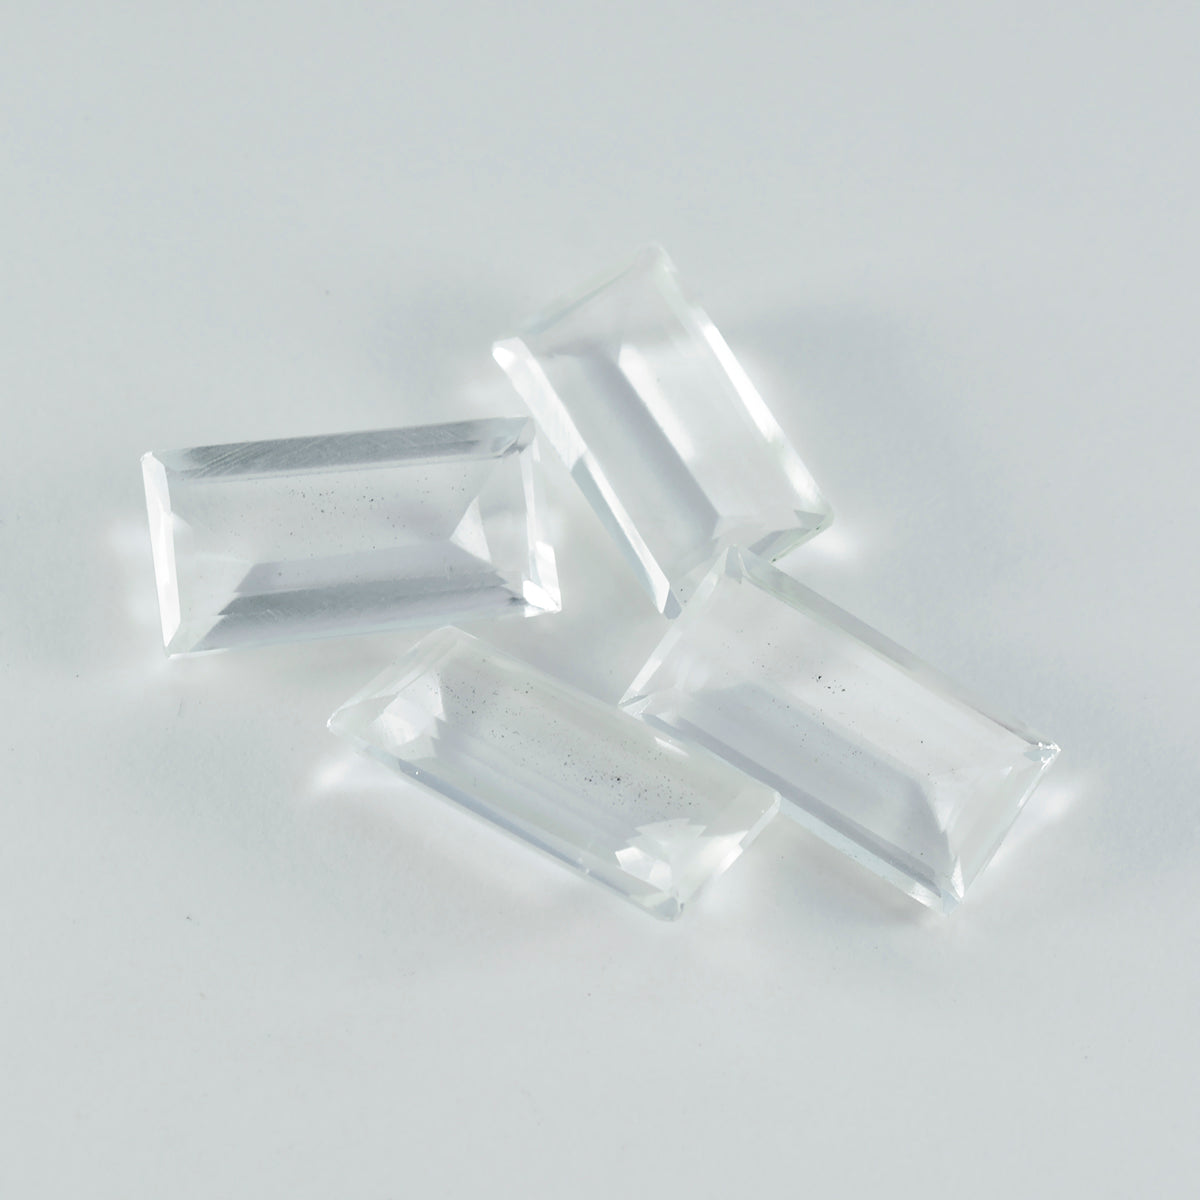 Riyogems 1PC White Crystal Quartz Faceted 8x16 mm Baguett Shape Good Quality Loose Gemstone